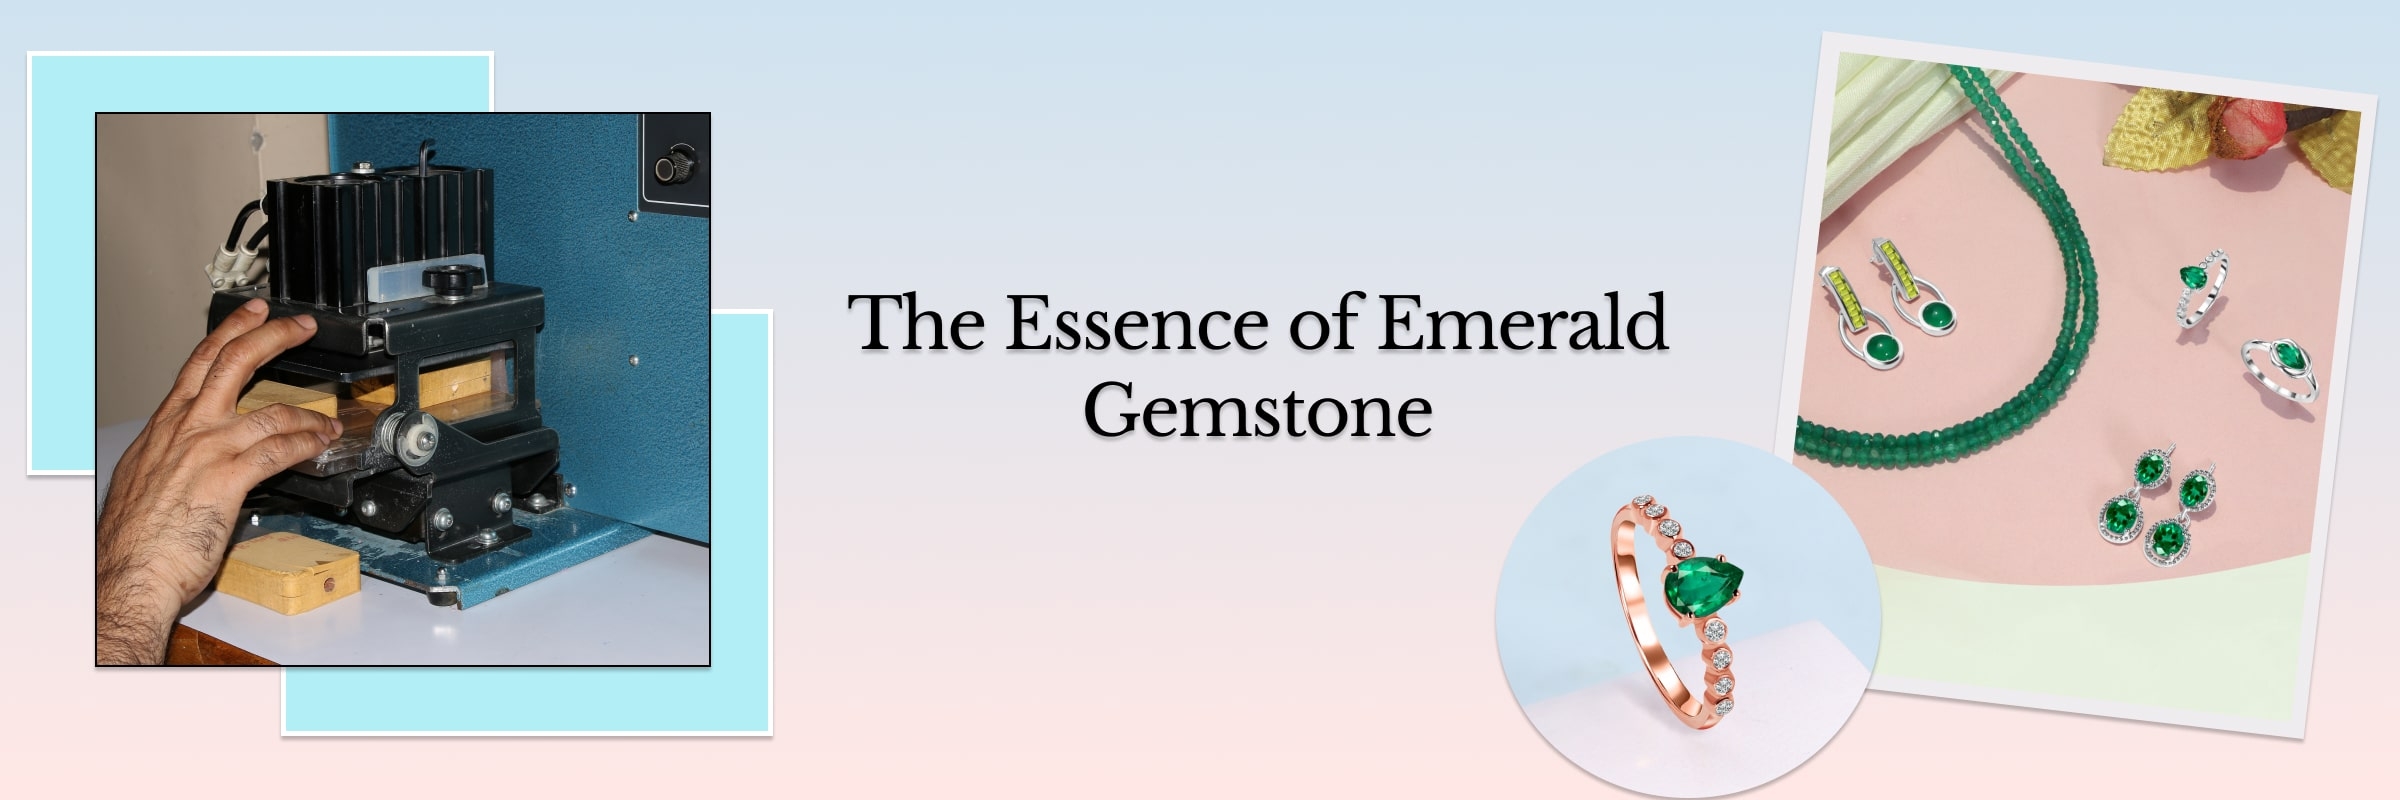 What is Emerald Gemstone, Basically?